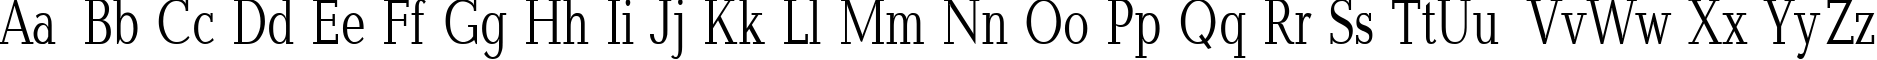 Пример написания английского алфавита шрифтом Baltica70n